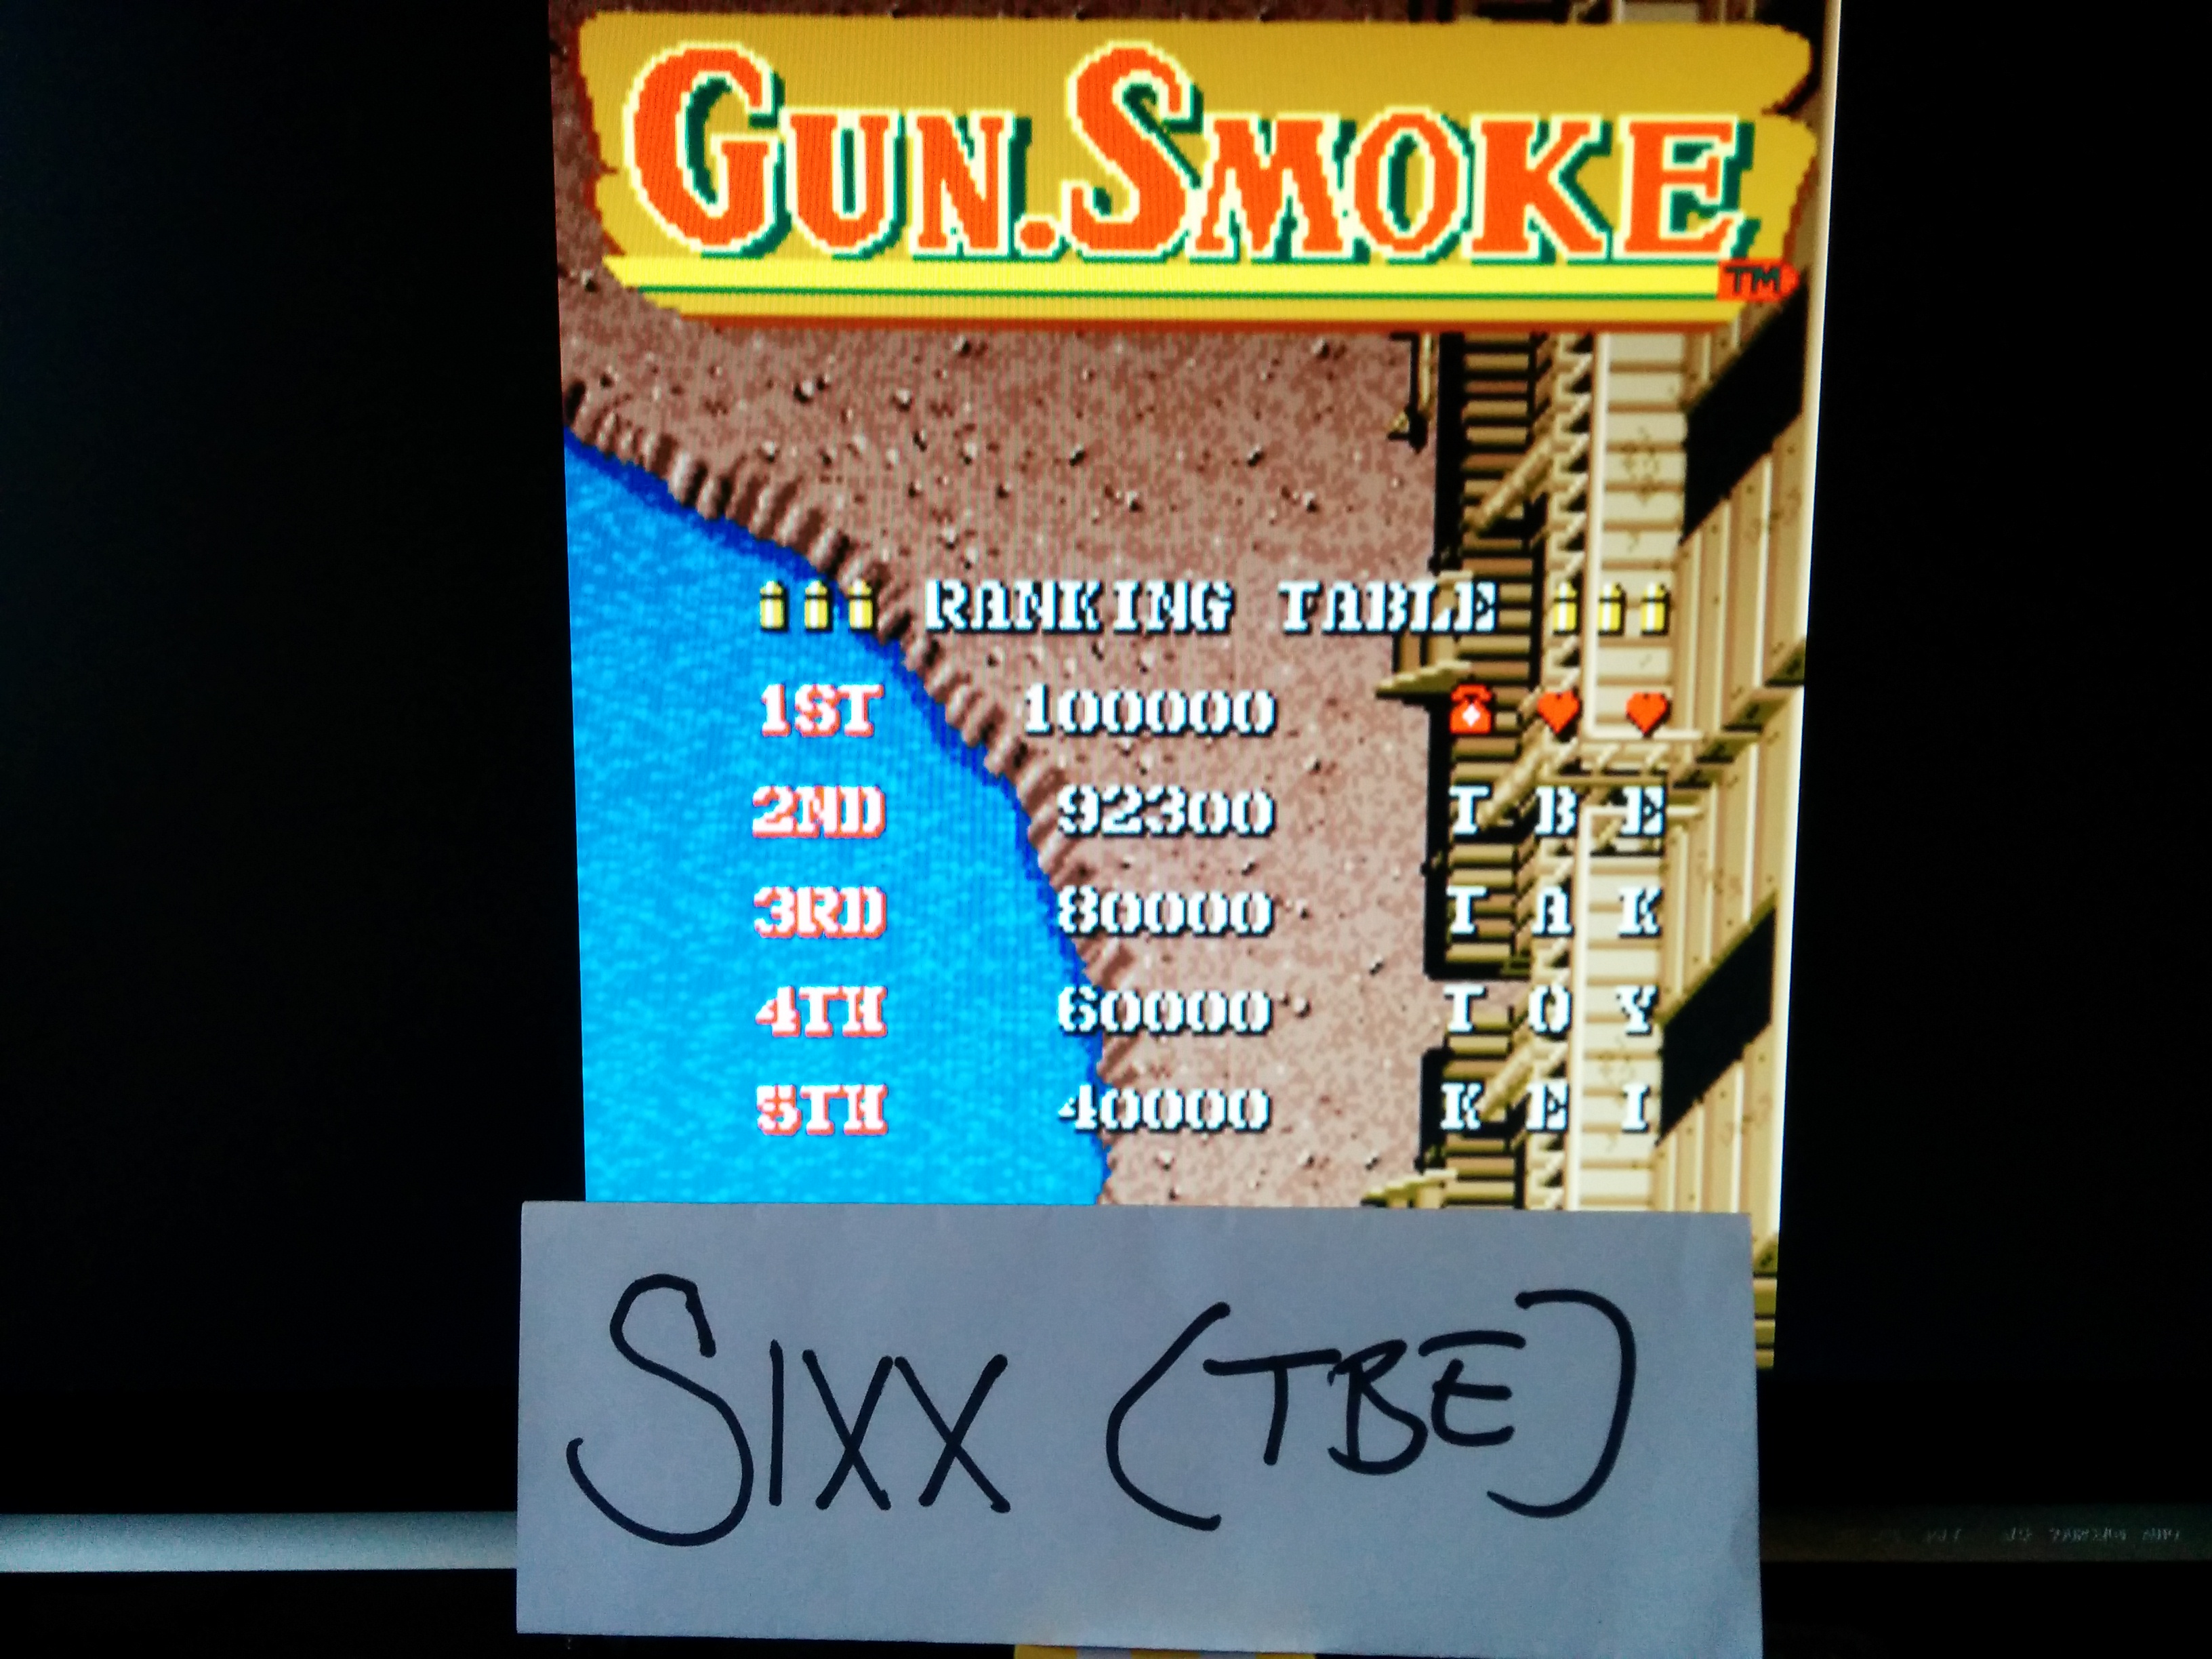 Sixx: Gun.Smoke (Arcade Emulated / M.A.M.E.) 92,300 points on 2014-04-17 10:46:09